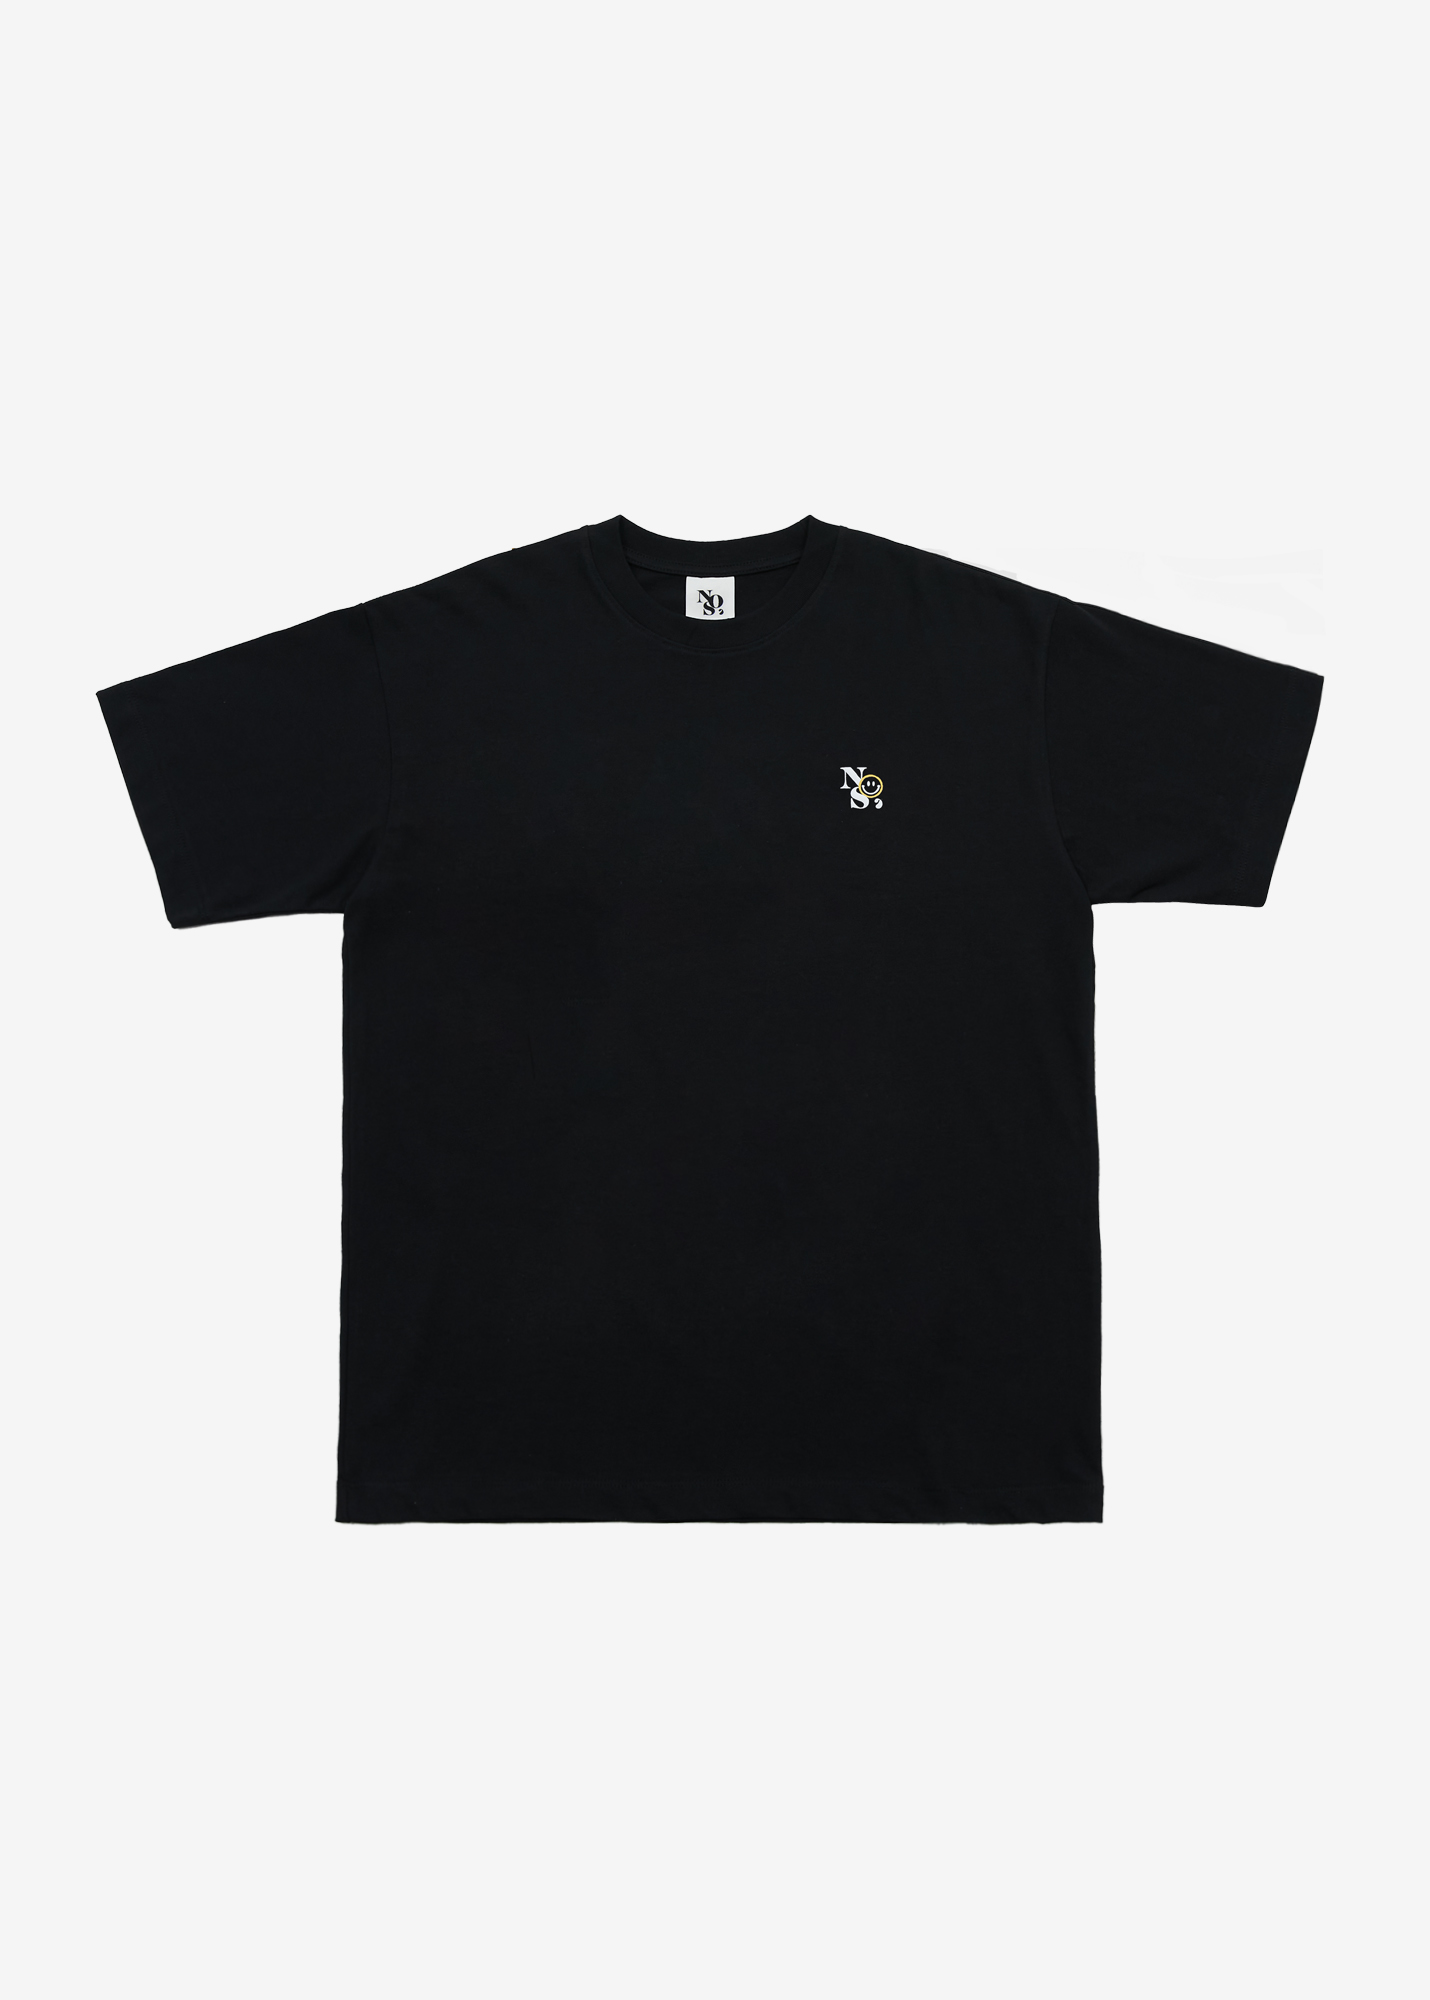 NOS7 Smile T-shirt - Black